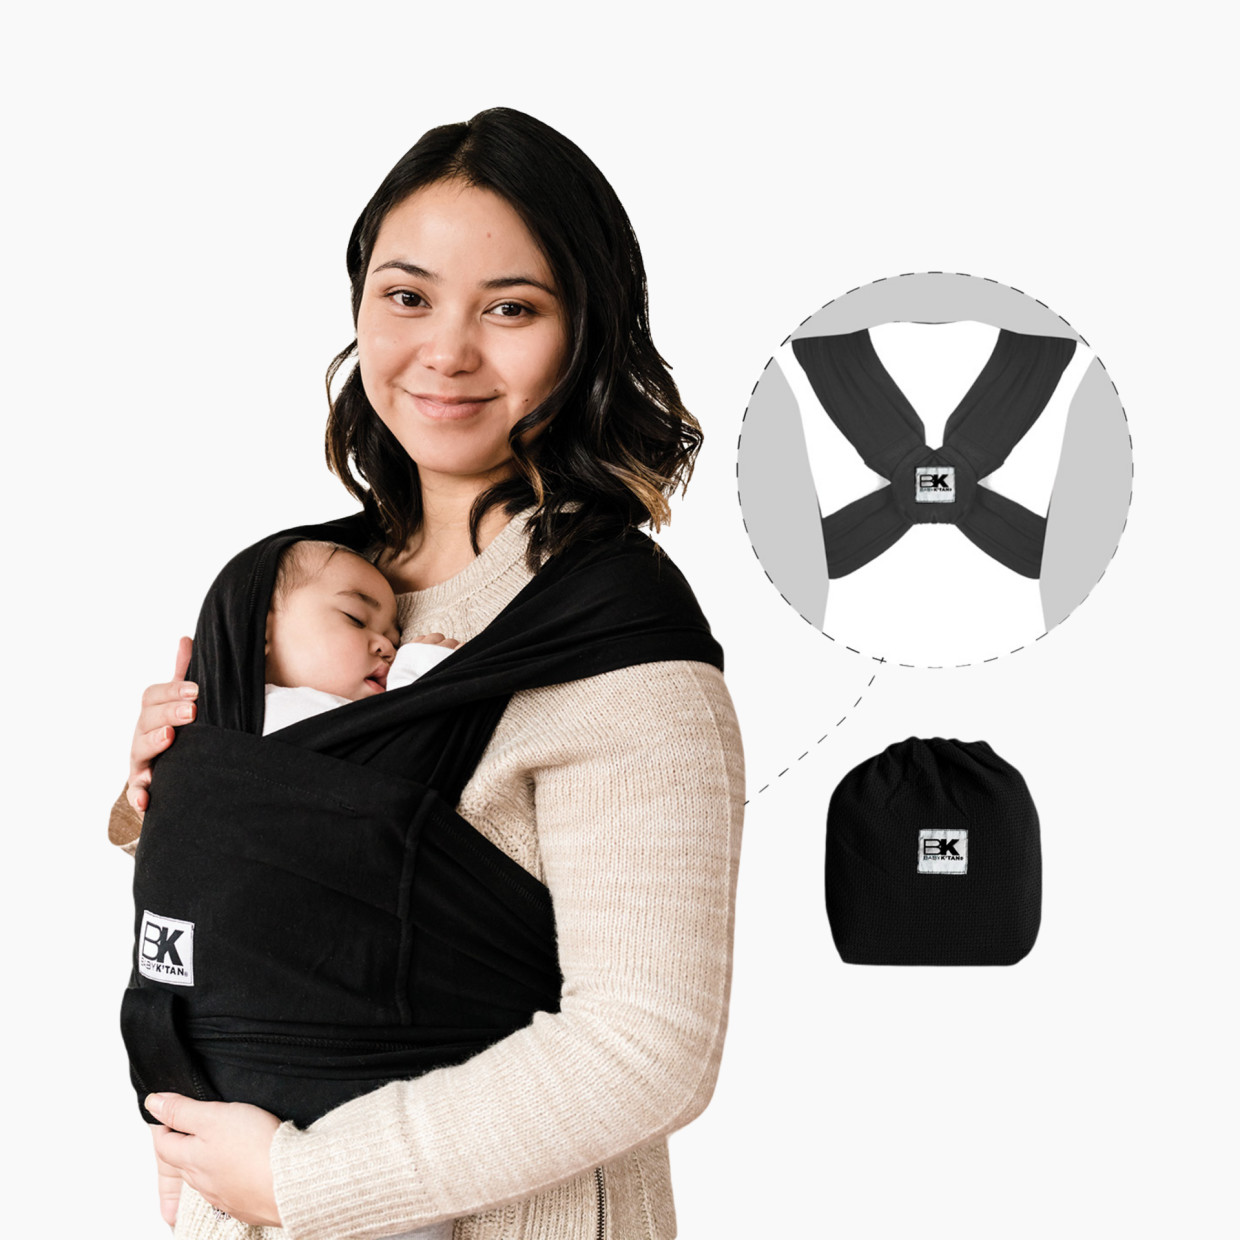 Baby K'tan Original Baby Wrap Carrier - Black, Medium.